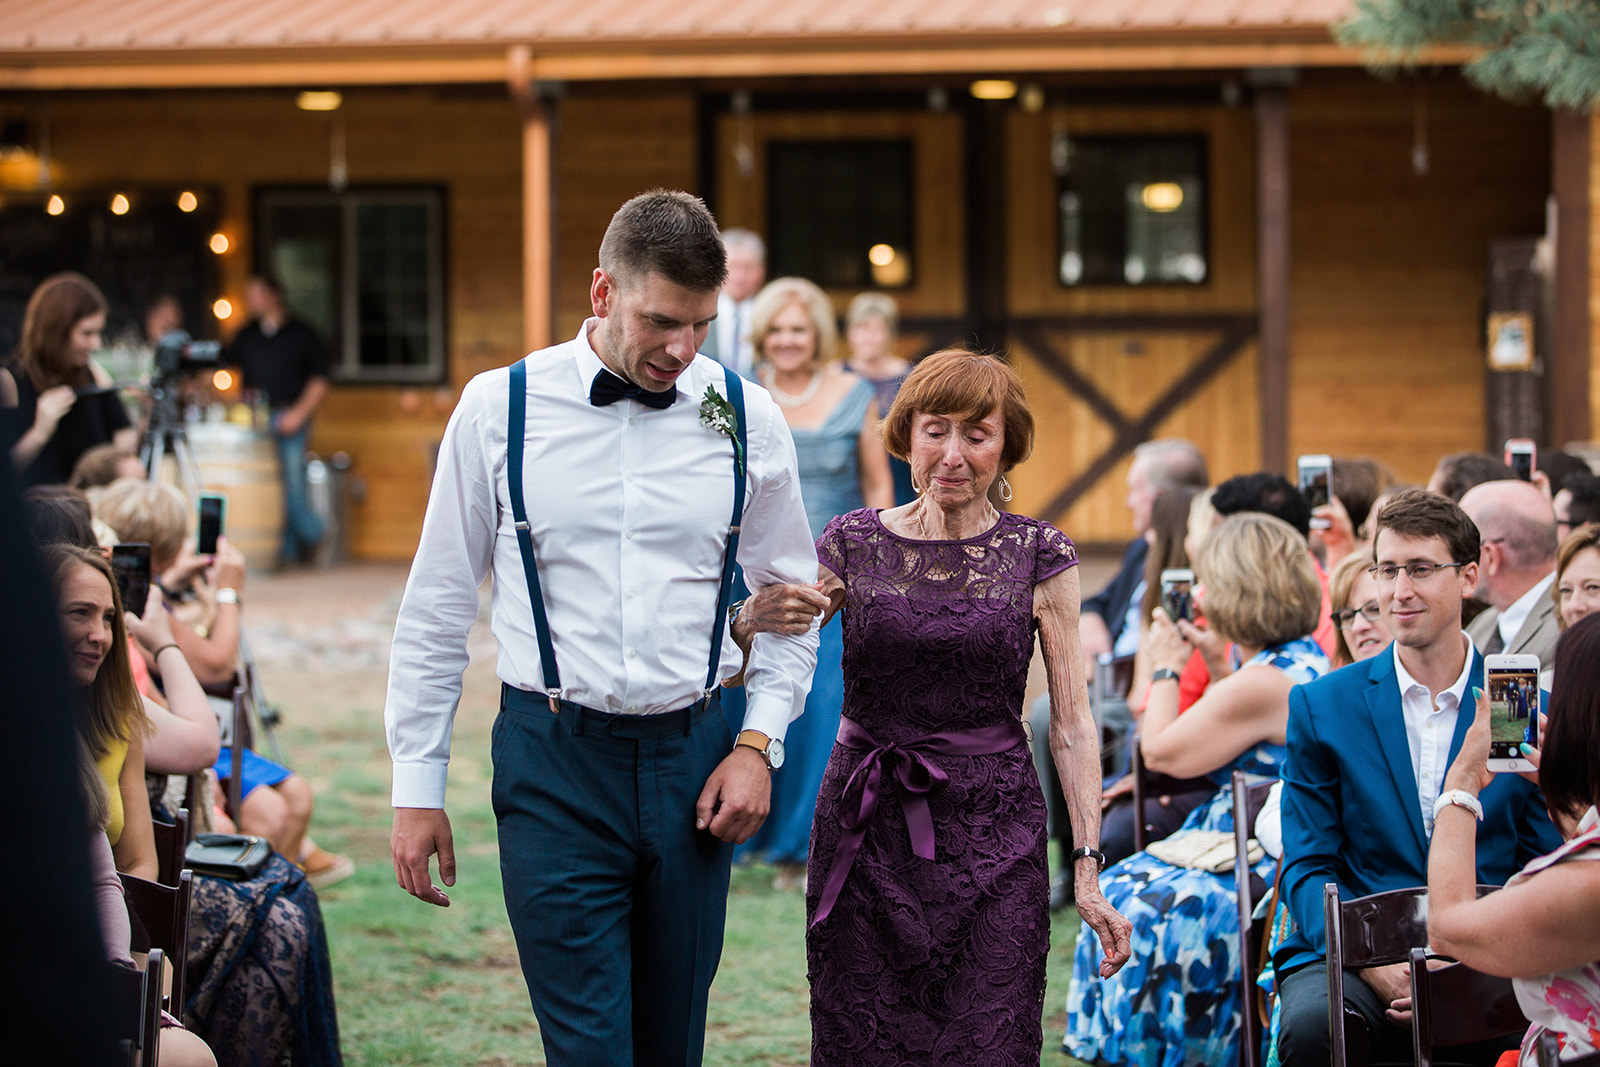 mom walks down aisle at winery barn wedding